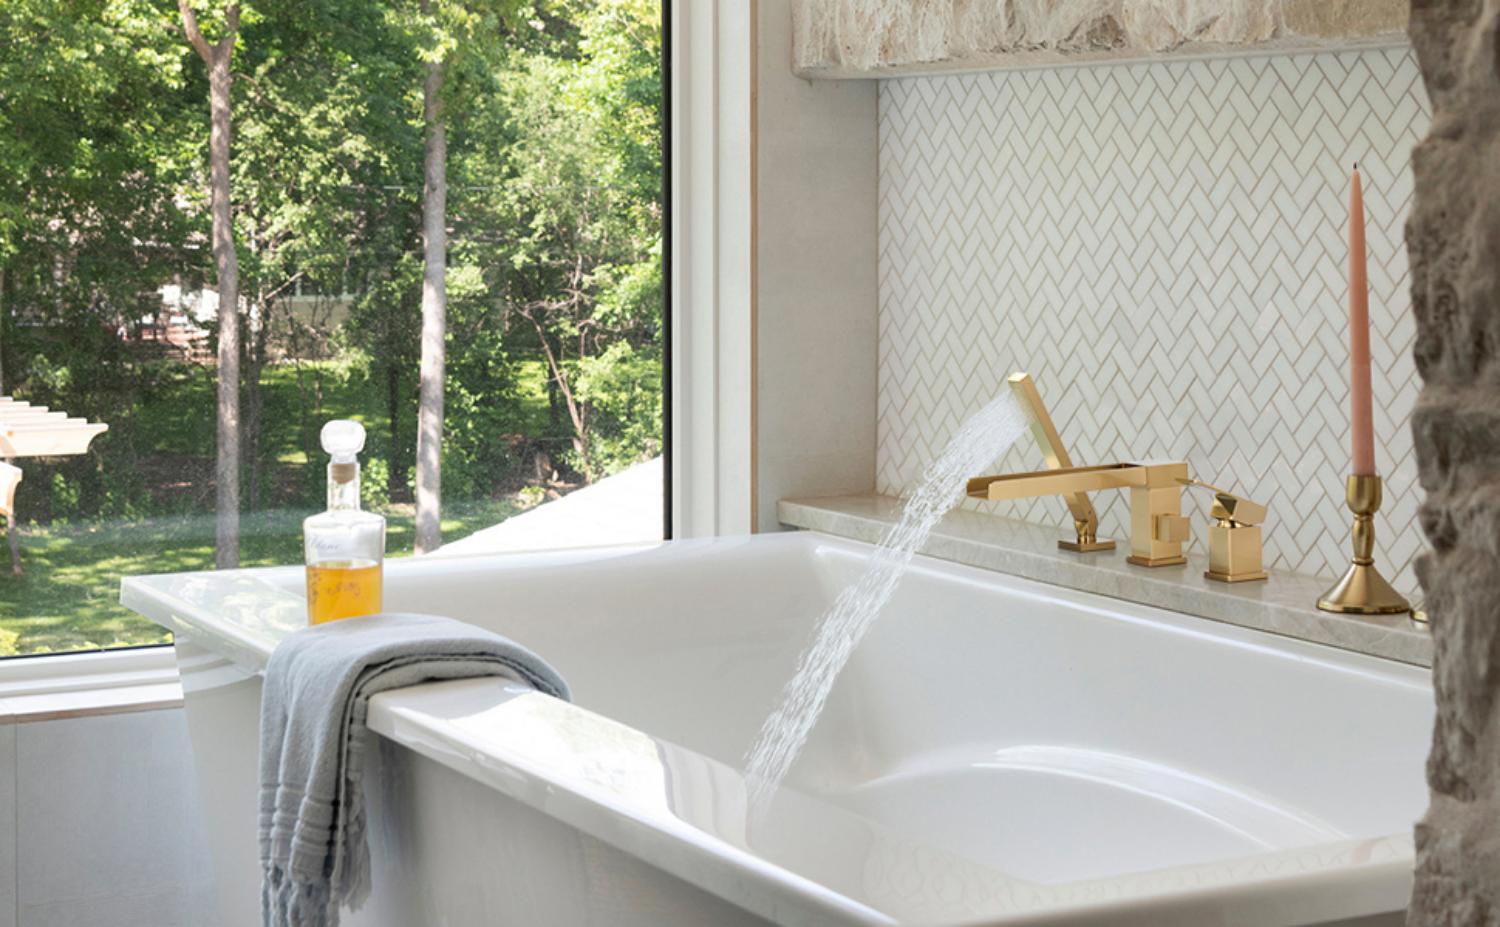 iVIGA Modern Roman Bathtub Faucet with Sprayer Garden Deck Mount Waterfall Bathroom Gold - Bathtub Faucets - 2